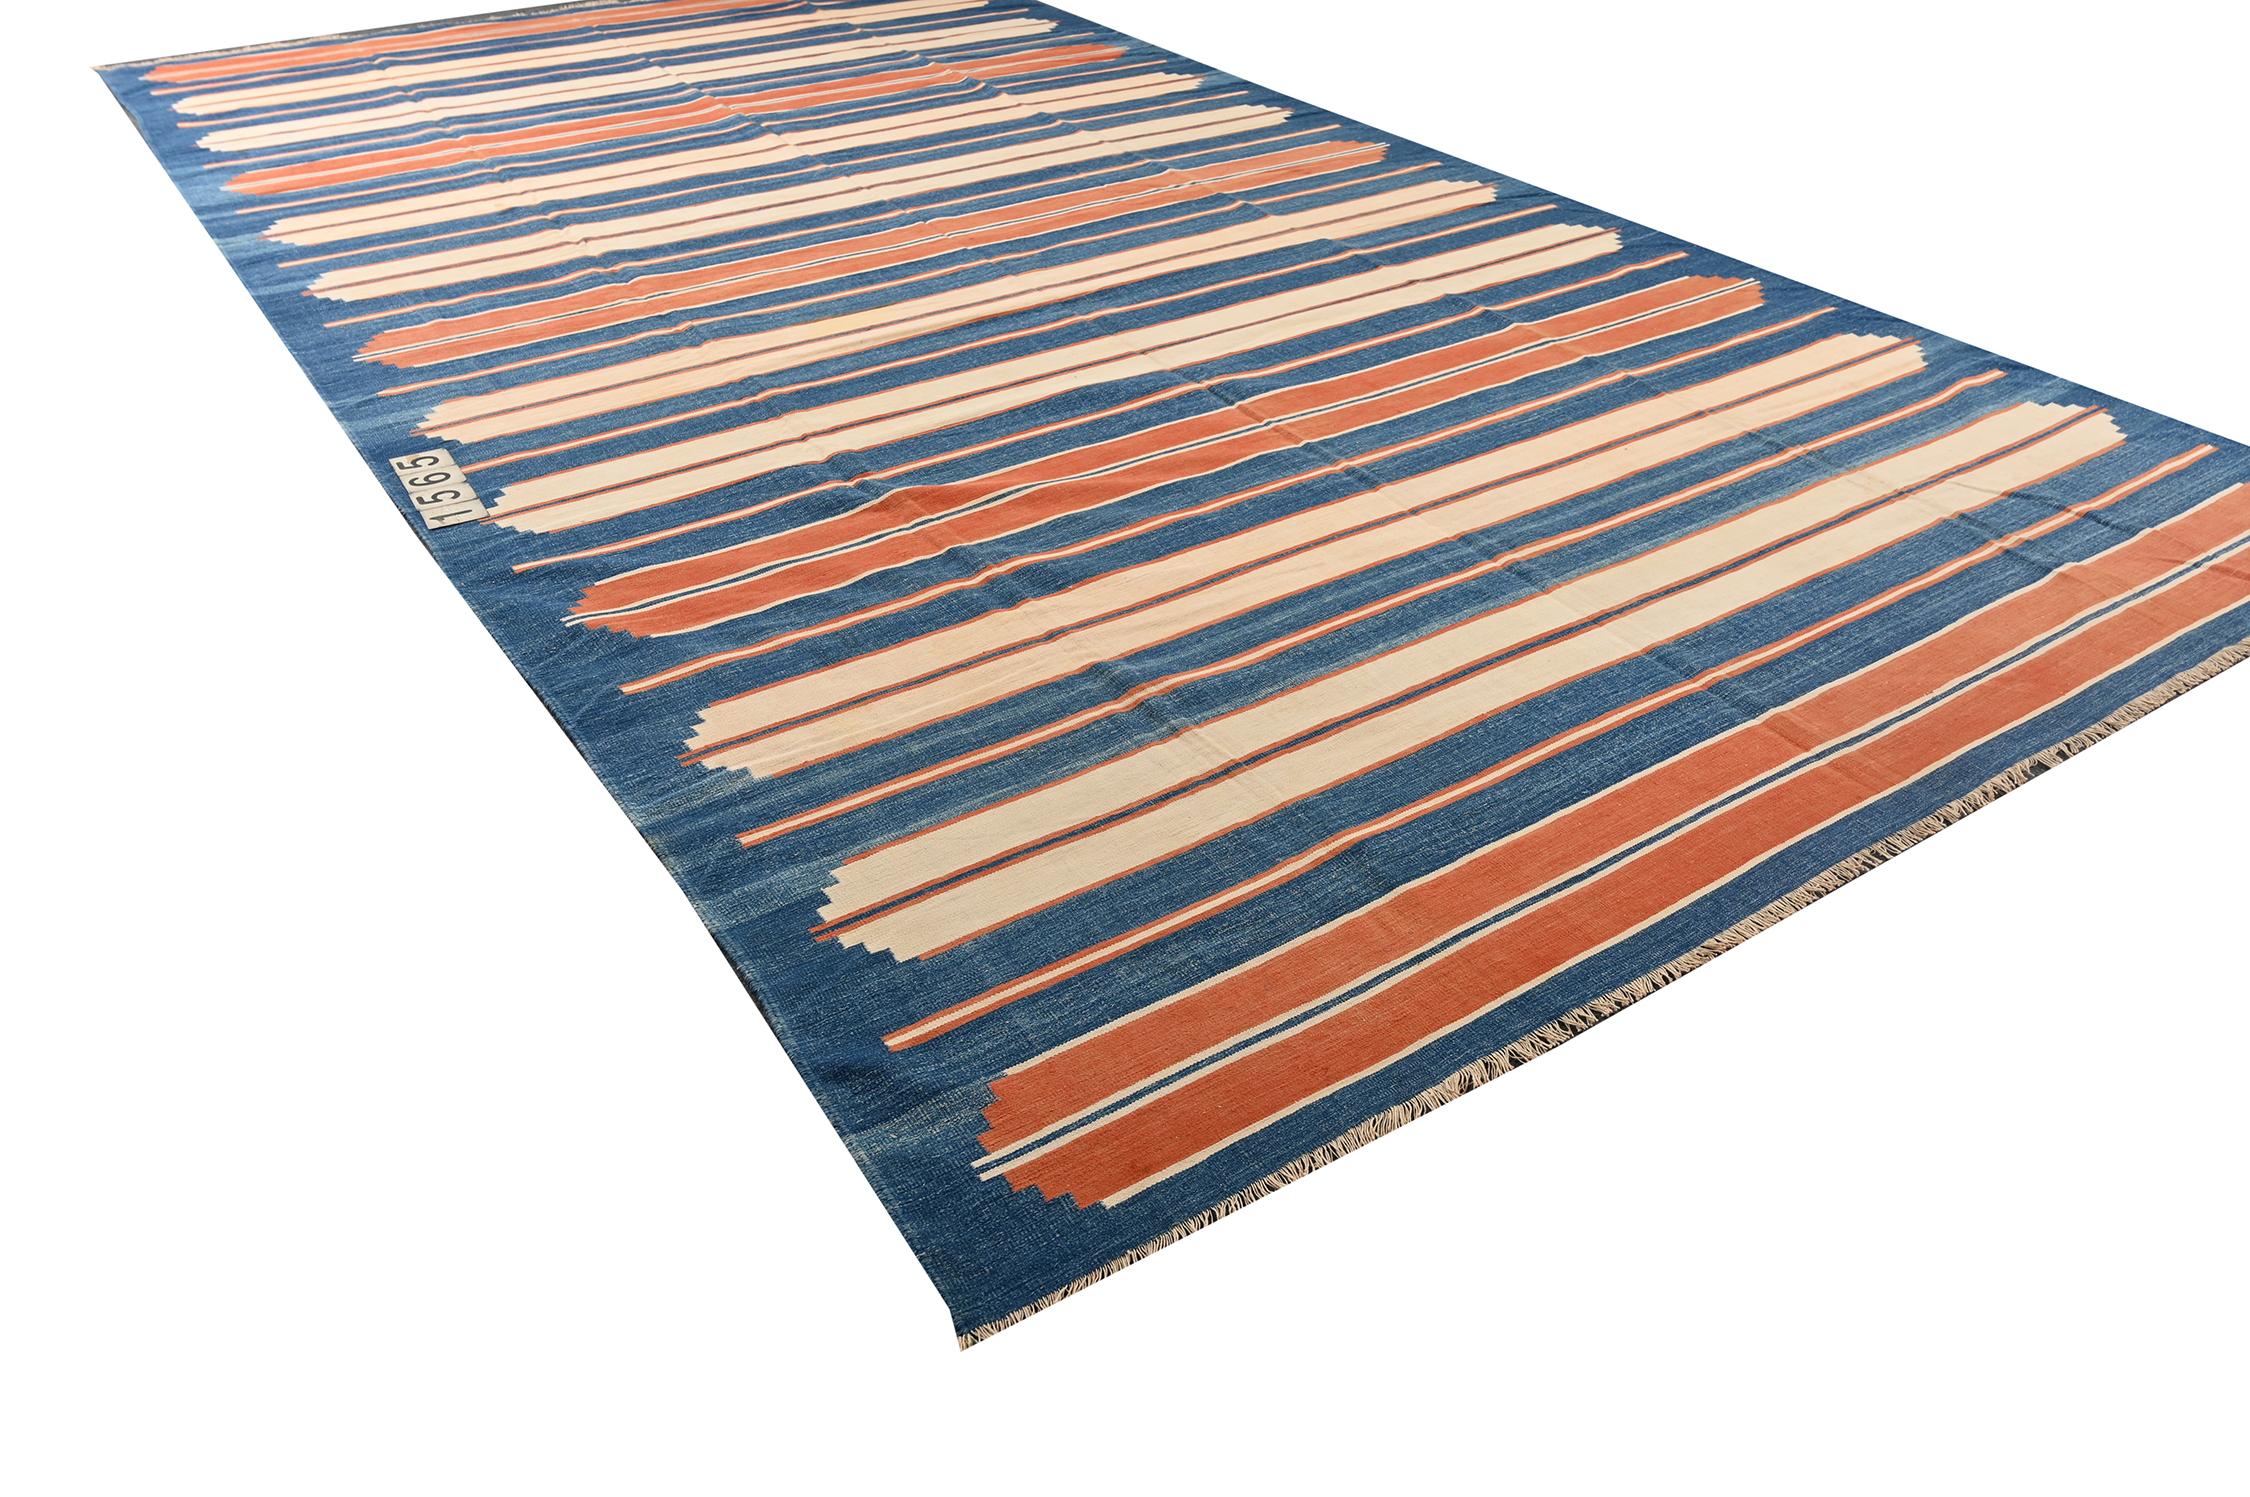 Indian Vintage Dhurrie Flat Weave in Blue and Orange Stripes Patterns by Rug & Kilim For Sale